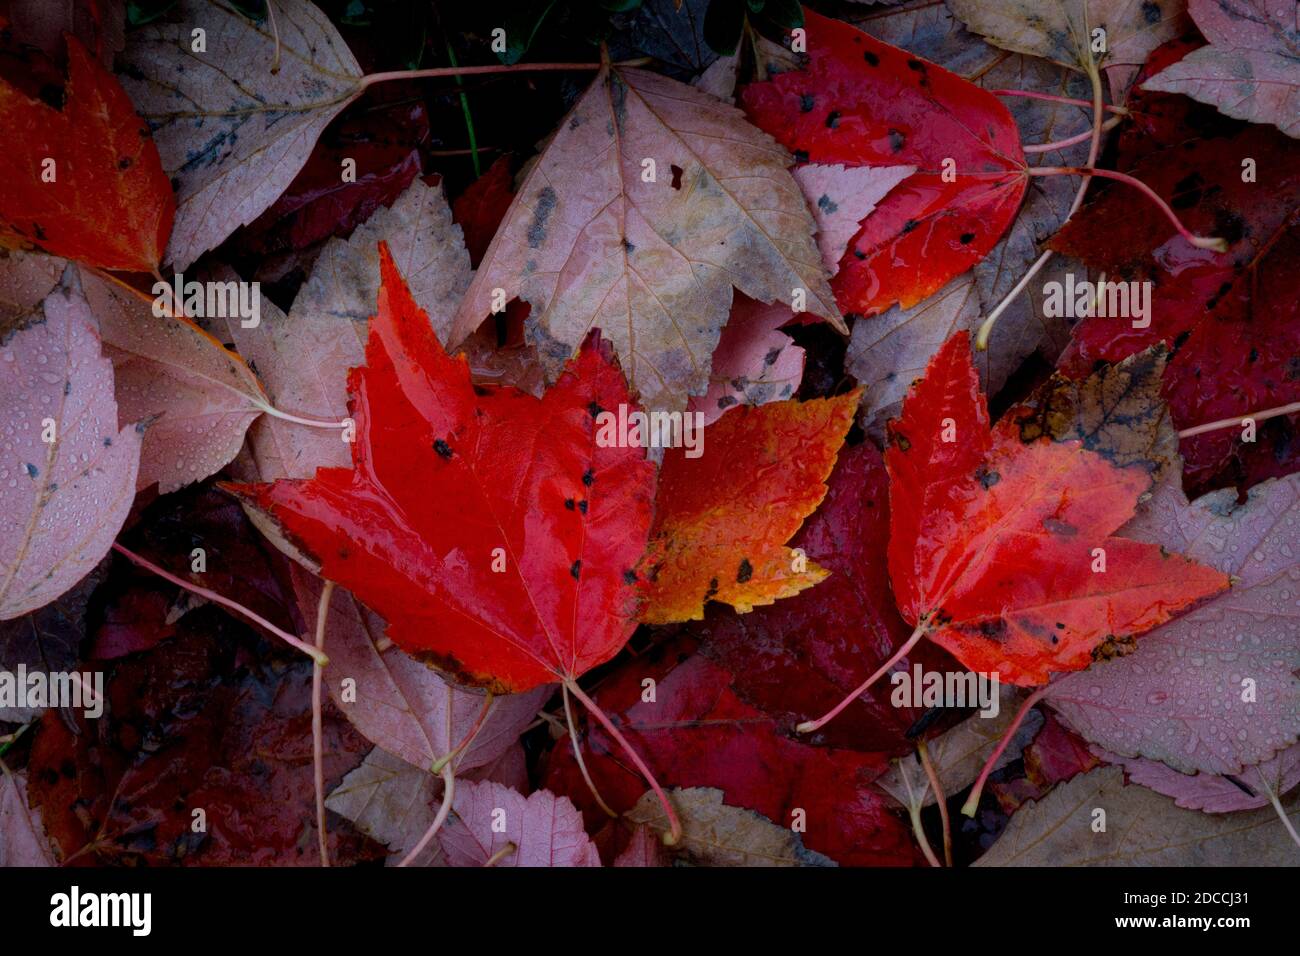 Wet leaves on the ground evoke the feeling of autumn Stock Photo